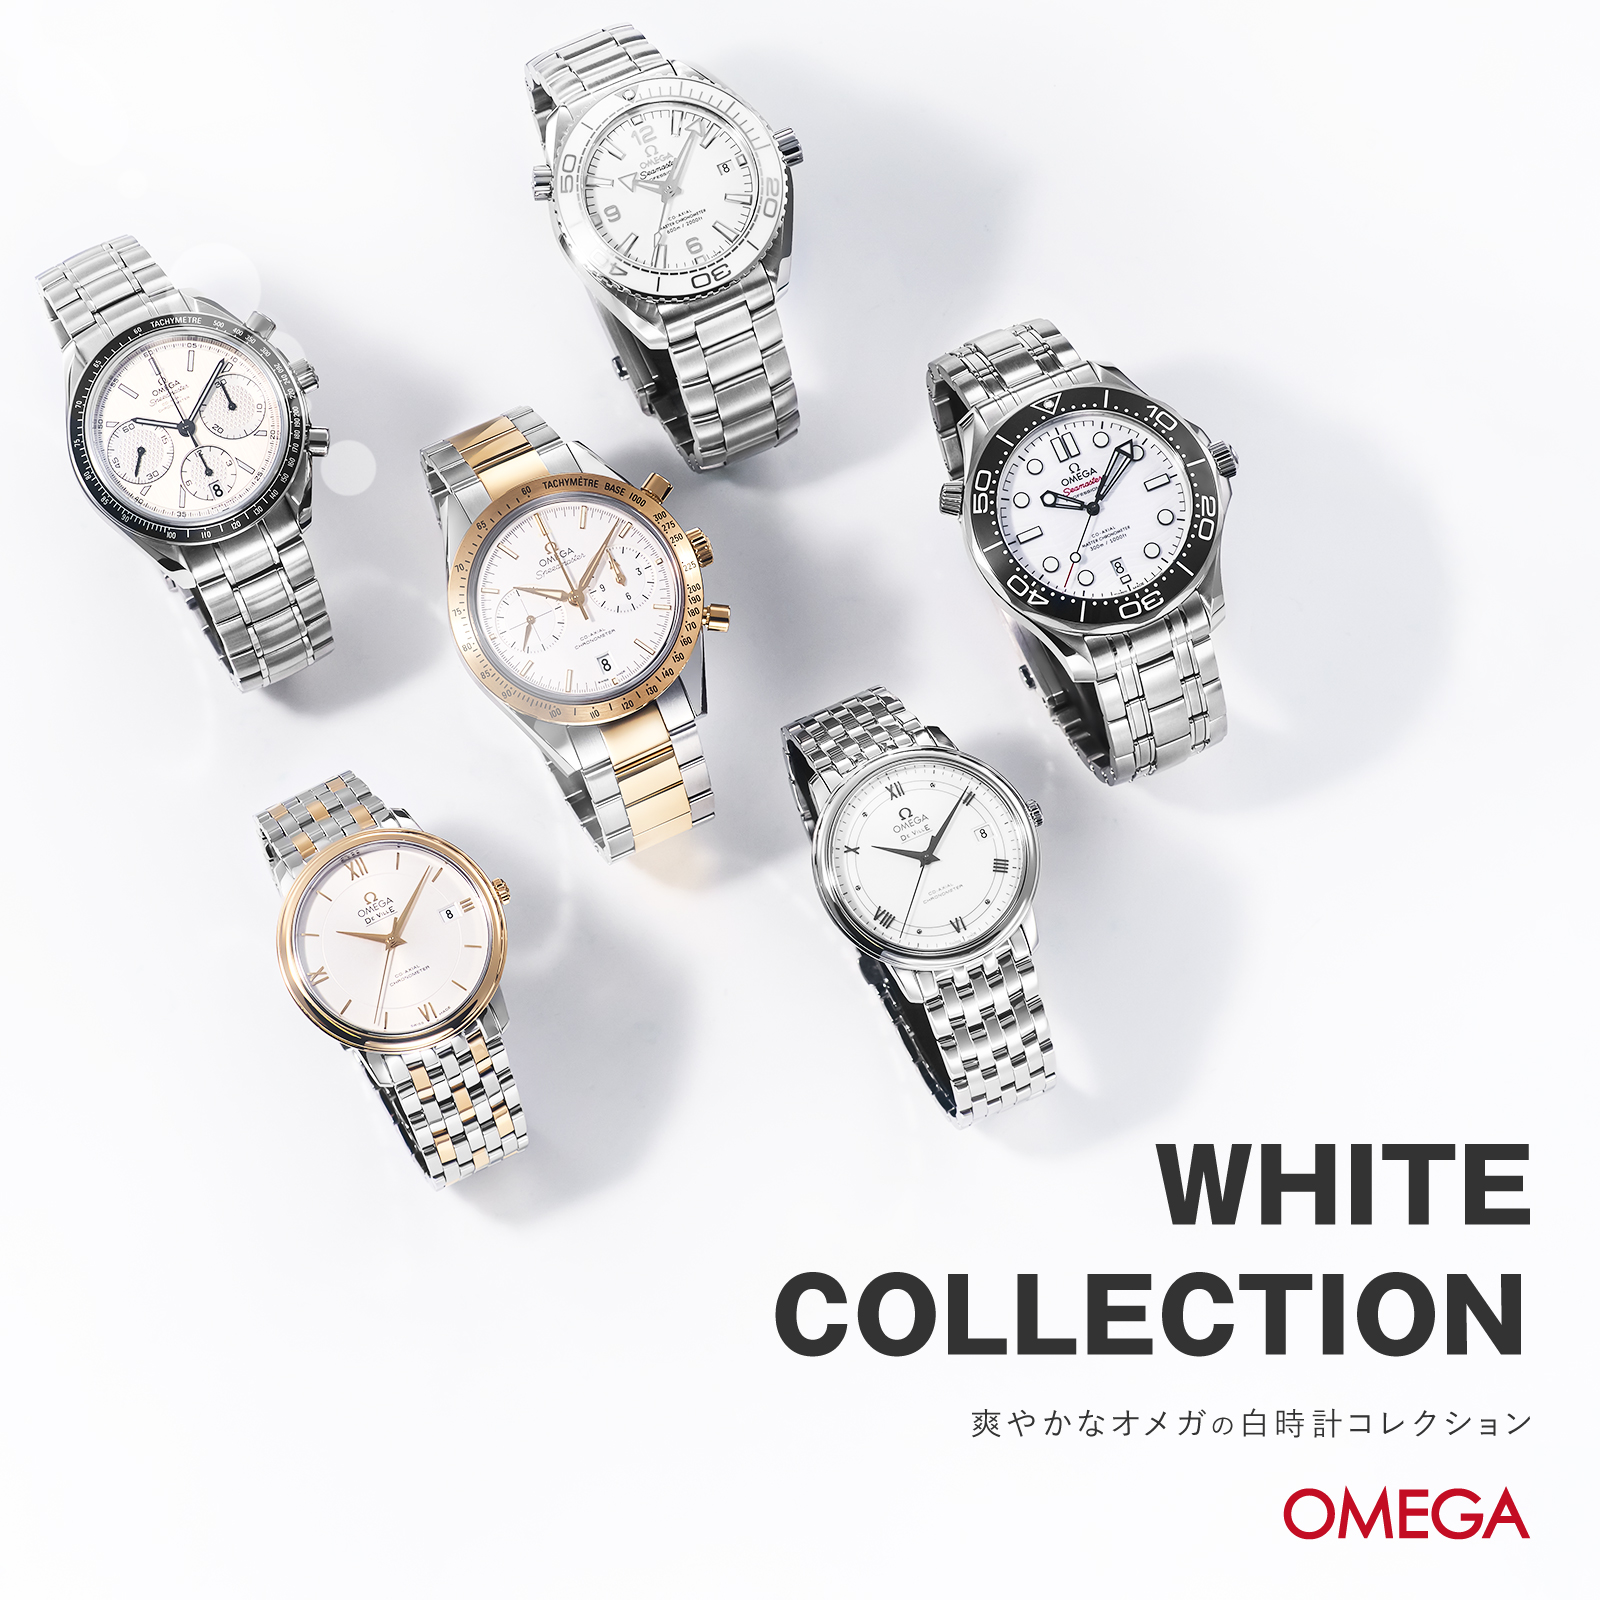 OMEGA (オメガ)白い時計特集